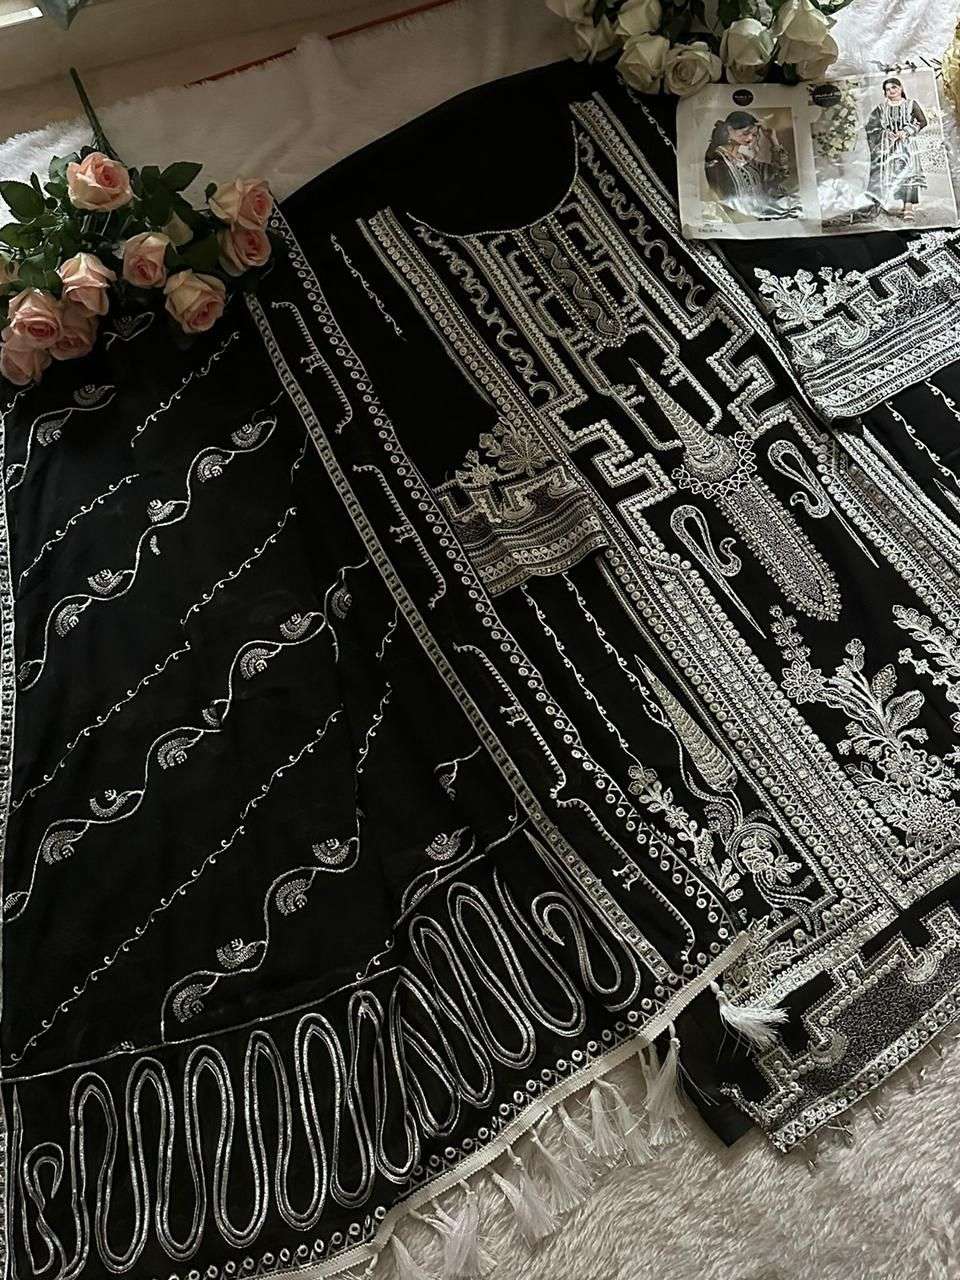 mehboob tex 1236 colour series designer wedding wear pakistani suit at wholesaler price surat india gujarat